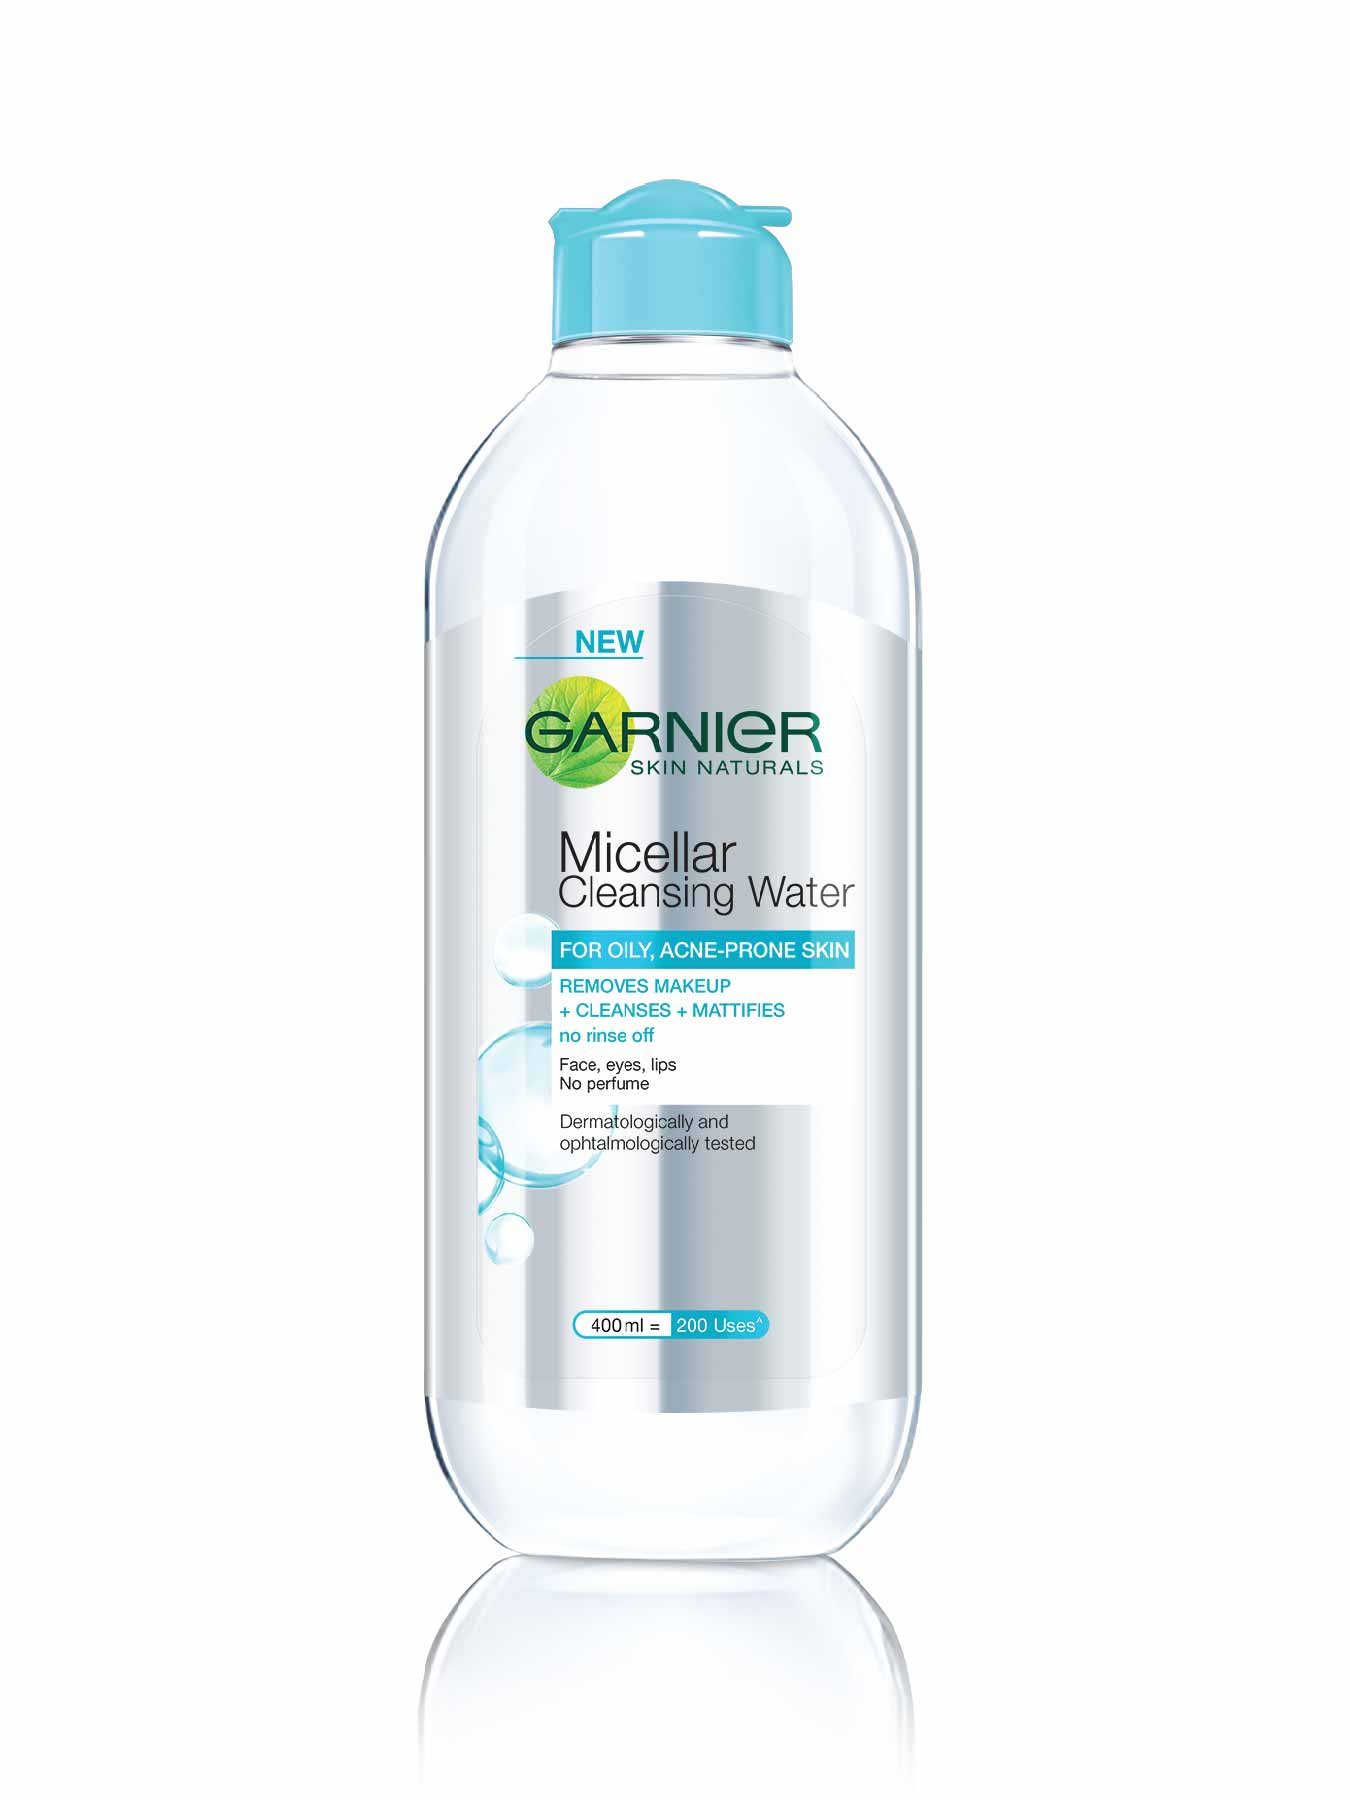 Garnier Micellar Cleansing Water for Oily, Acne-Prone Skin